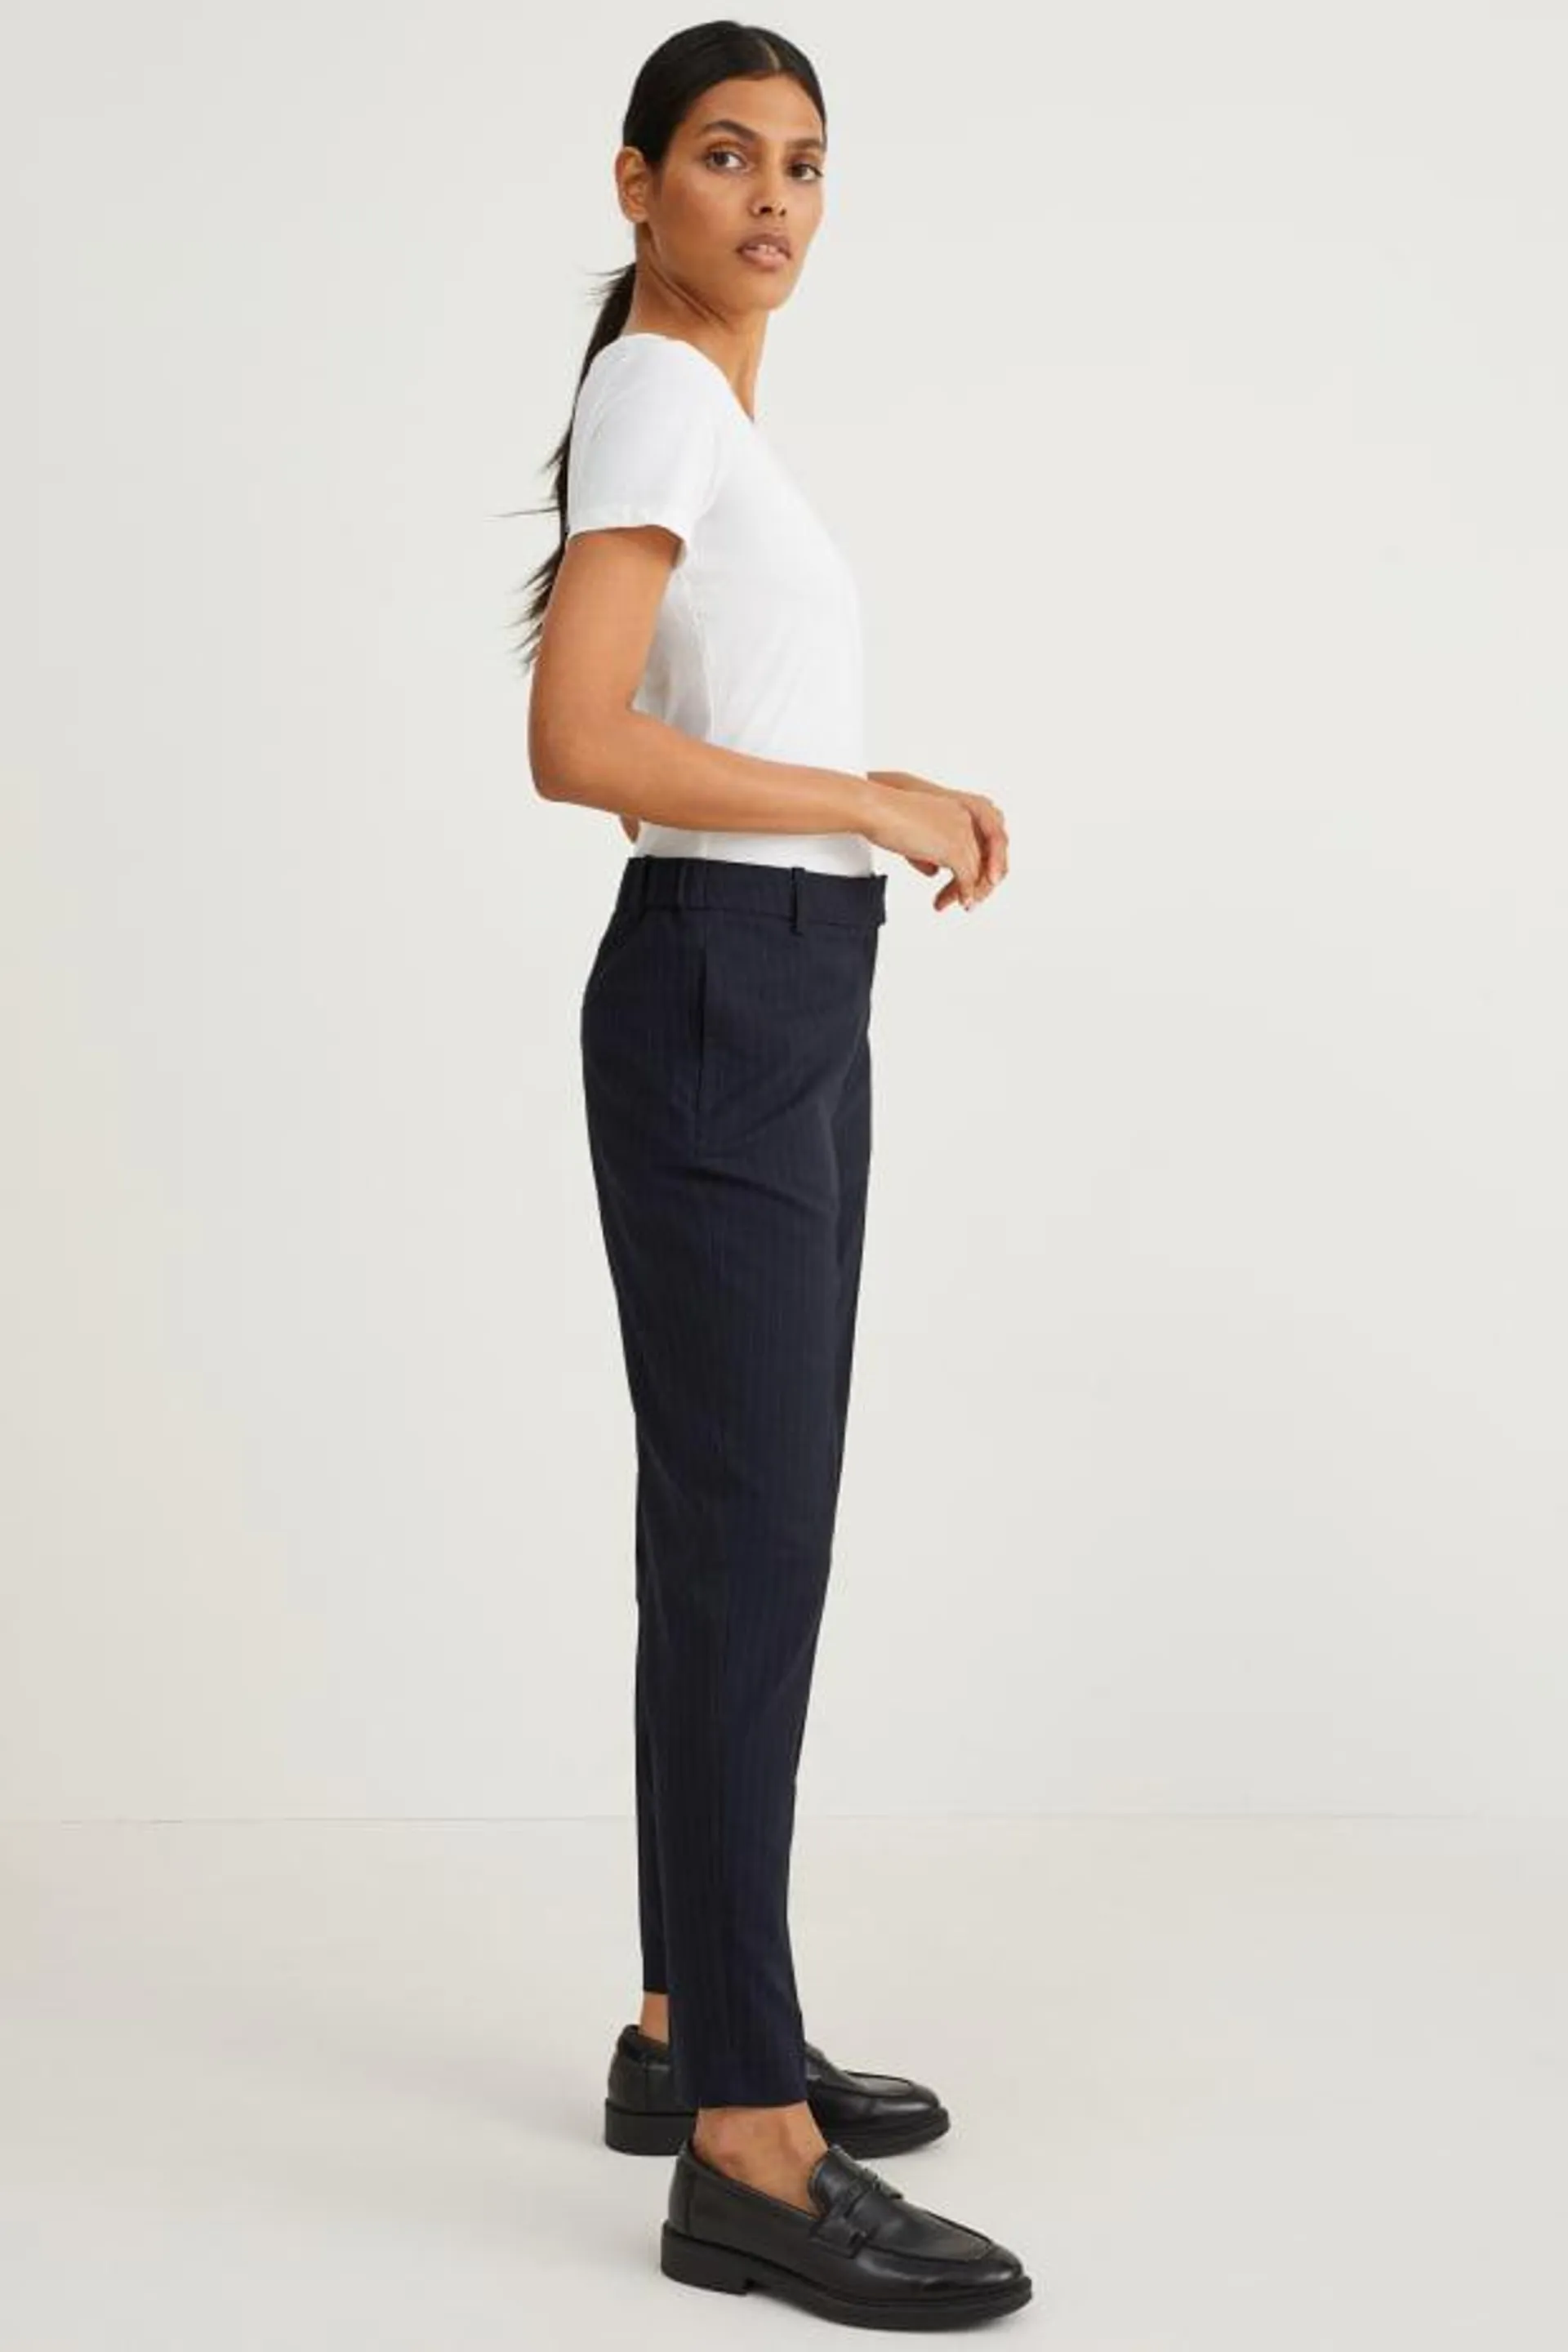 Cloth trousers - mid-rise waist - slim fit - pinstripes